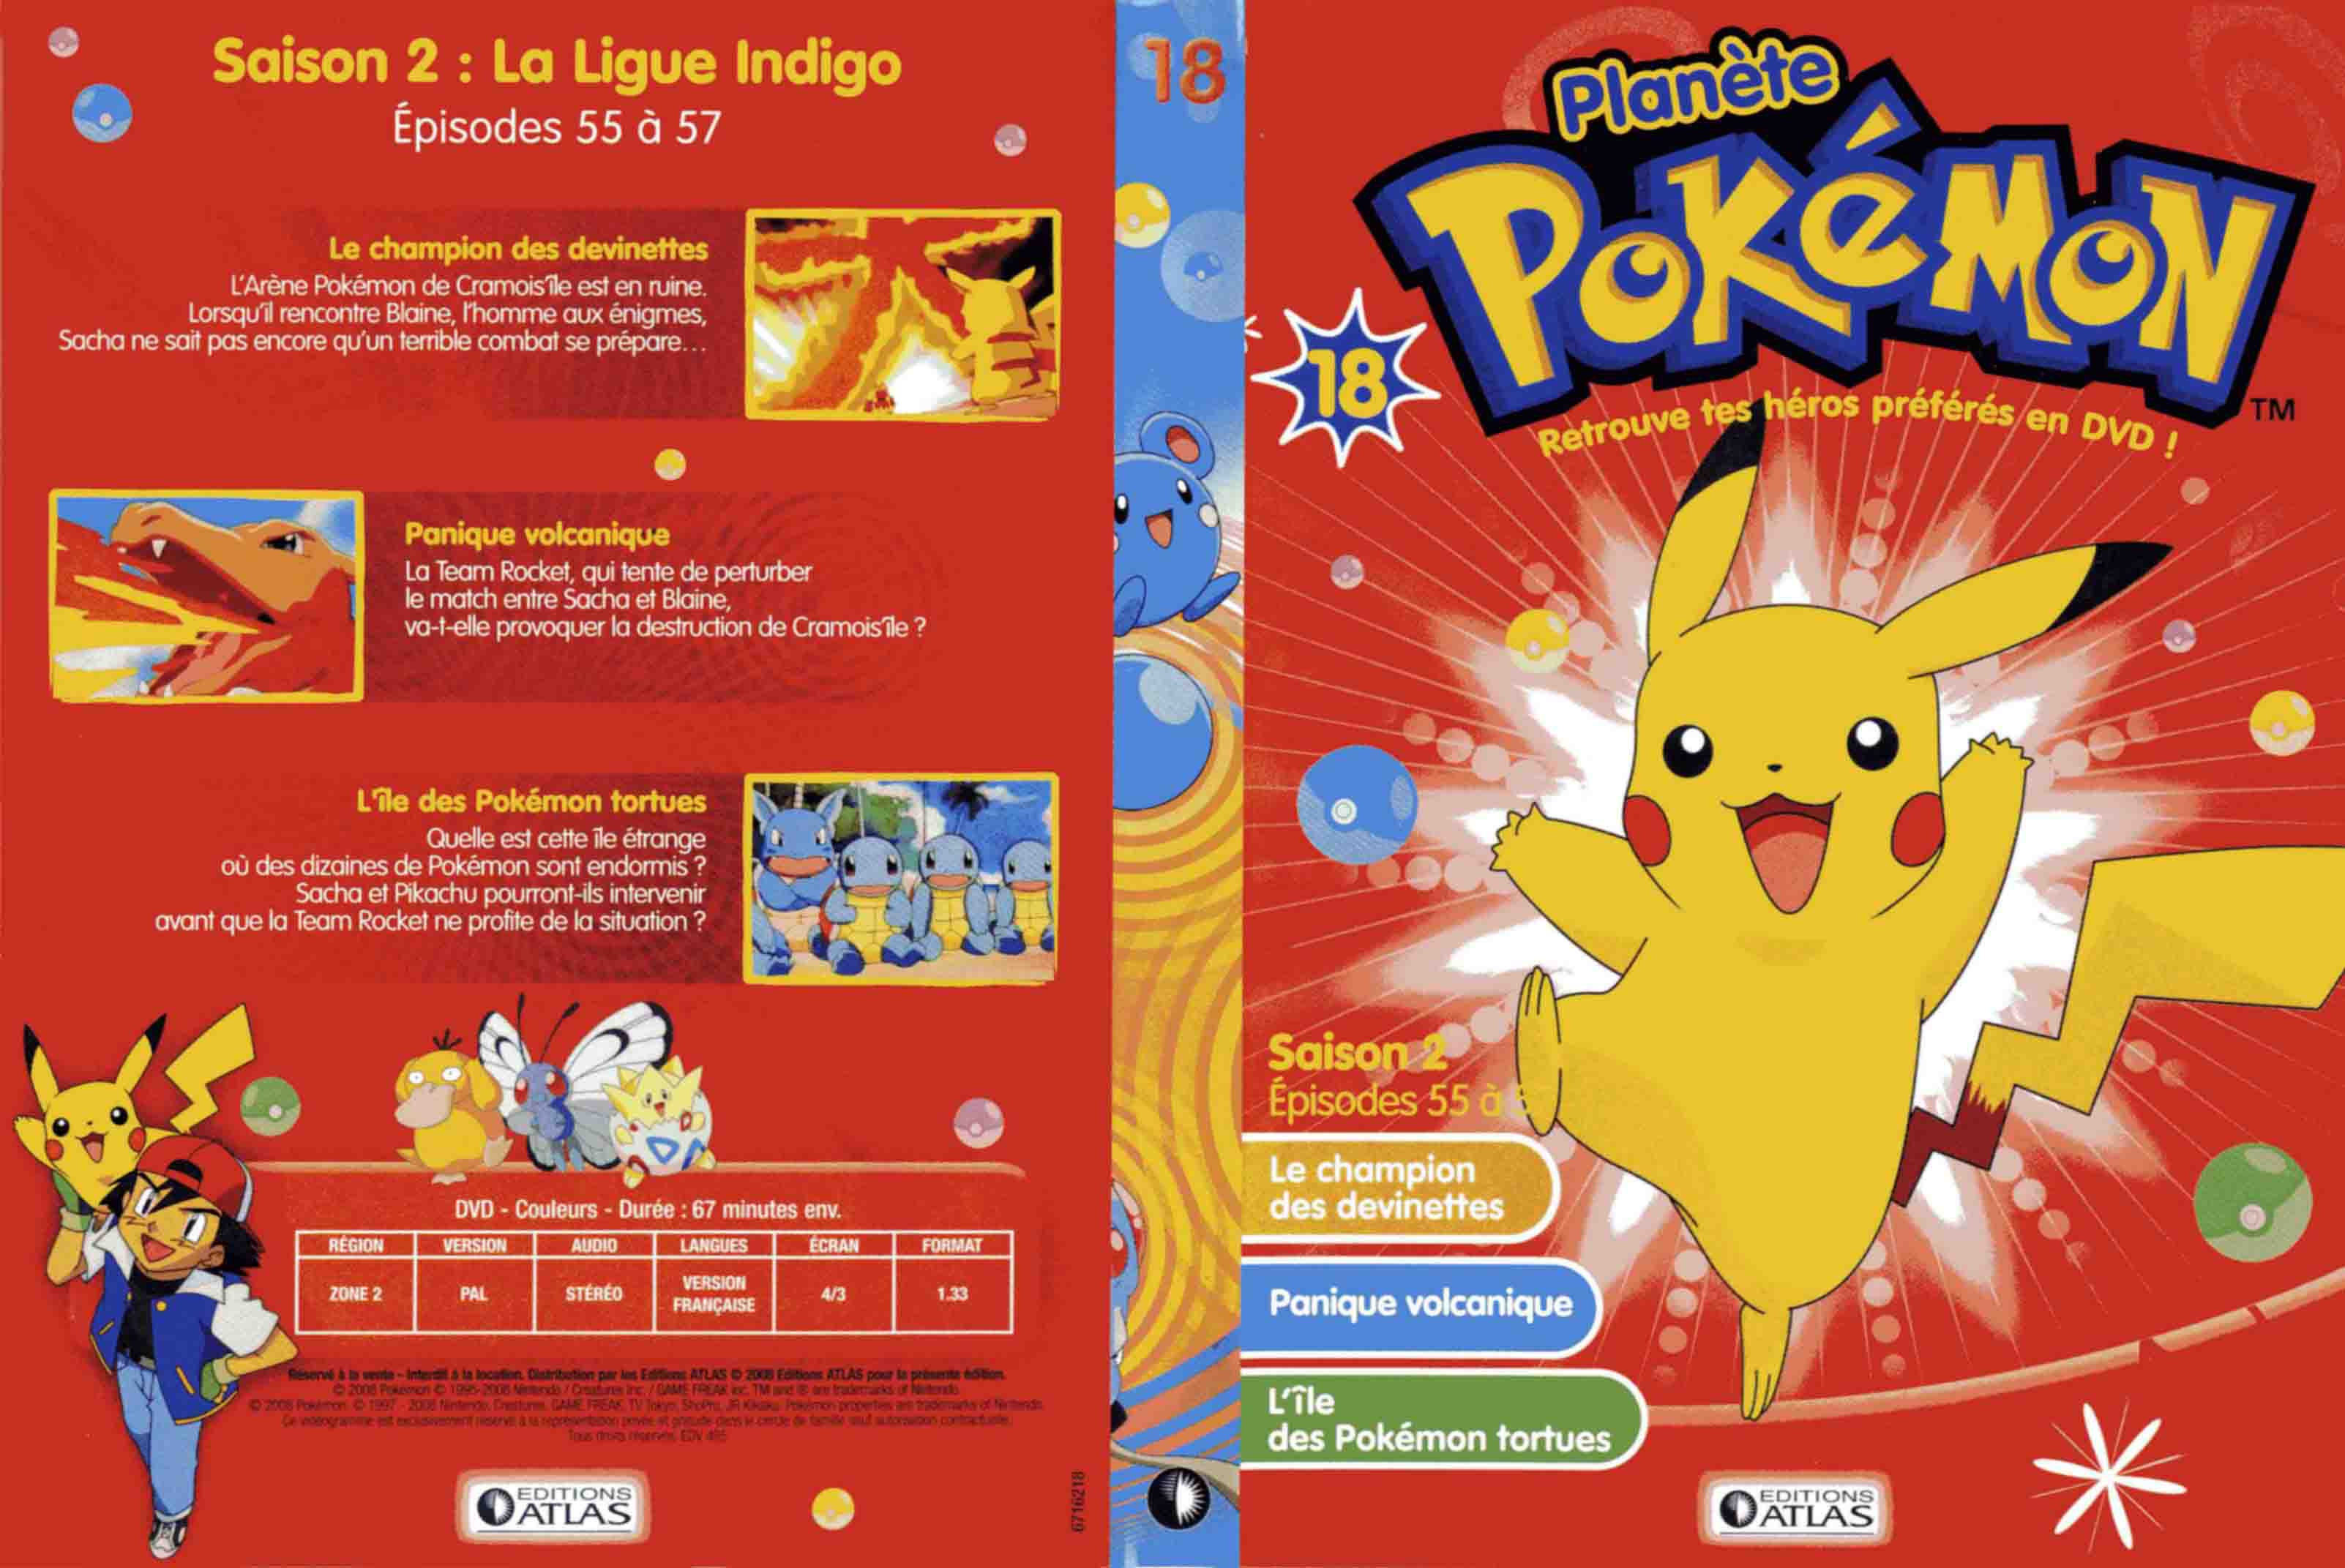 Jaquette DVD Planete Pokemon vol 18